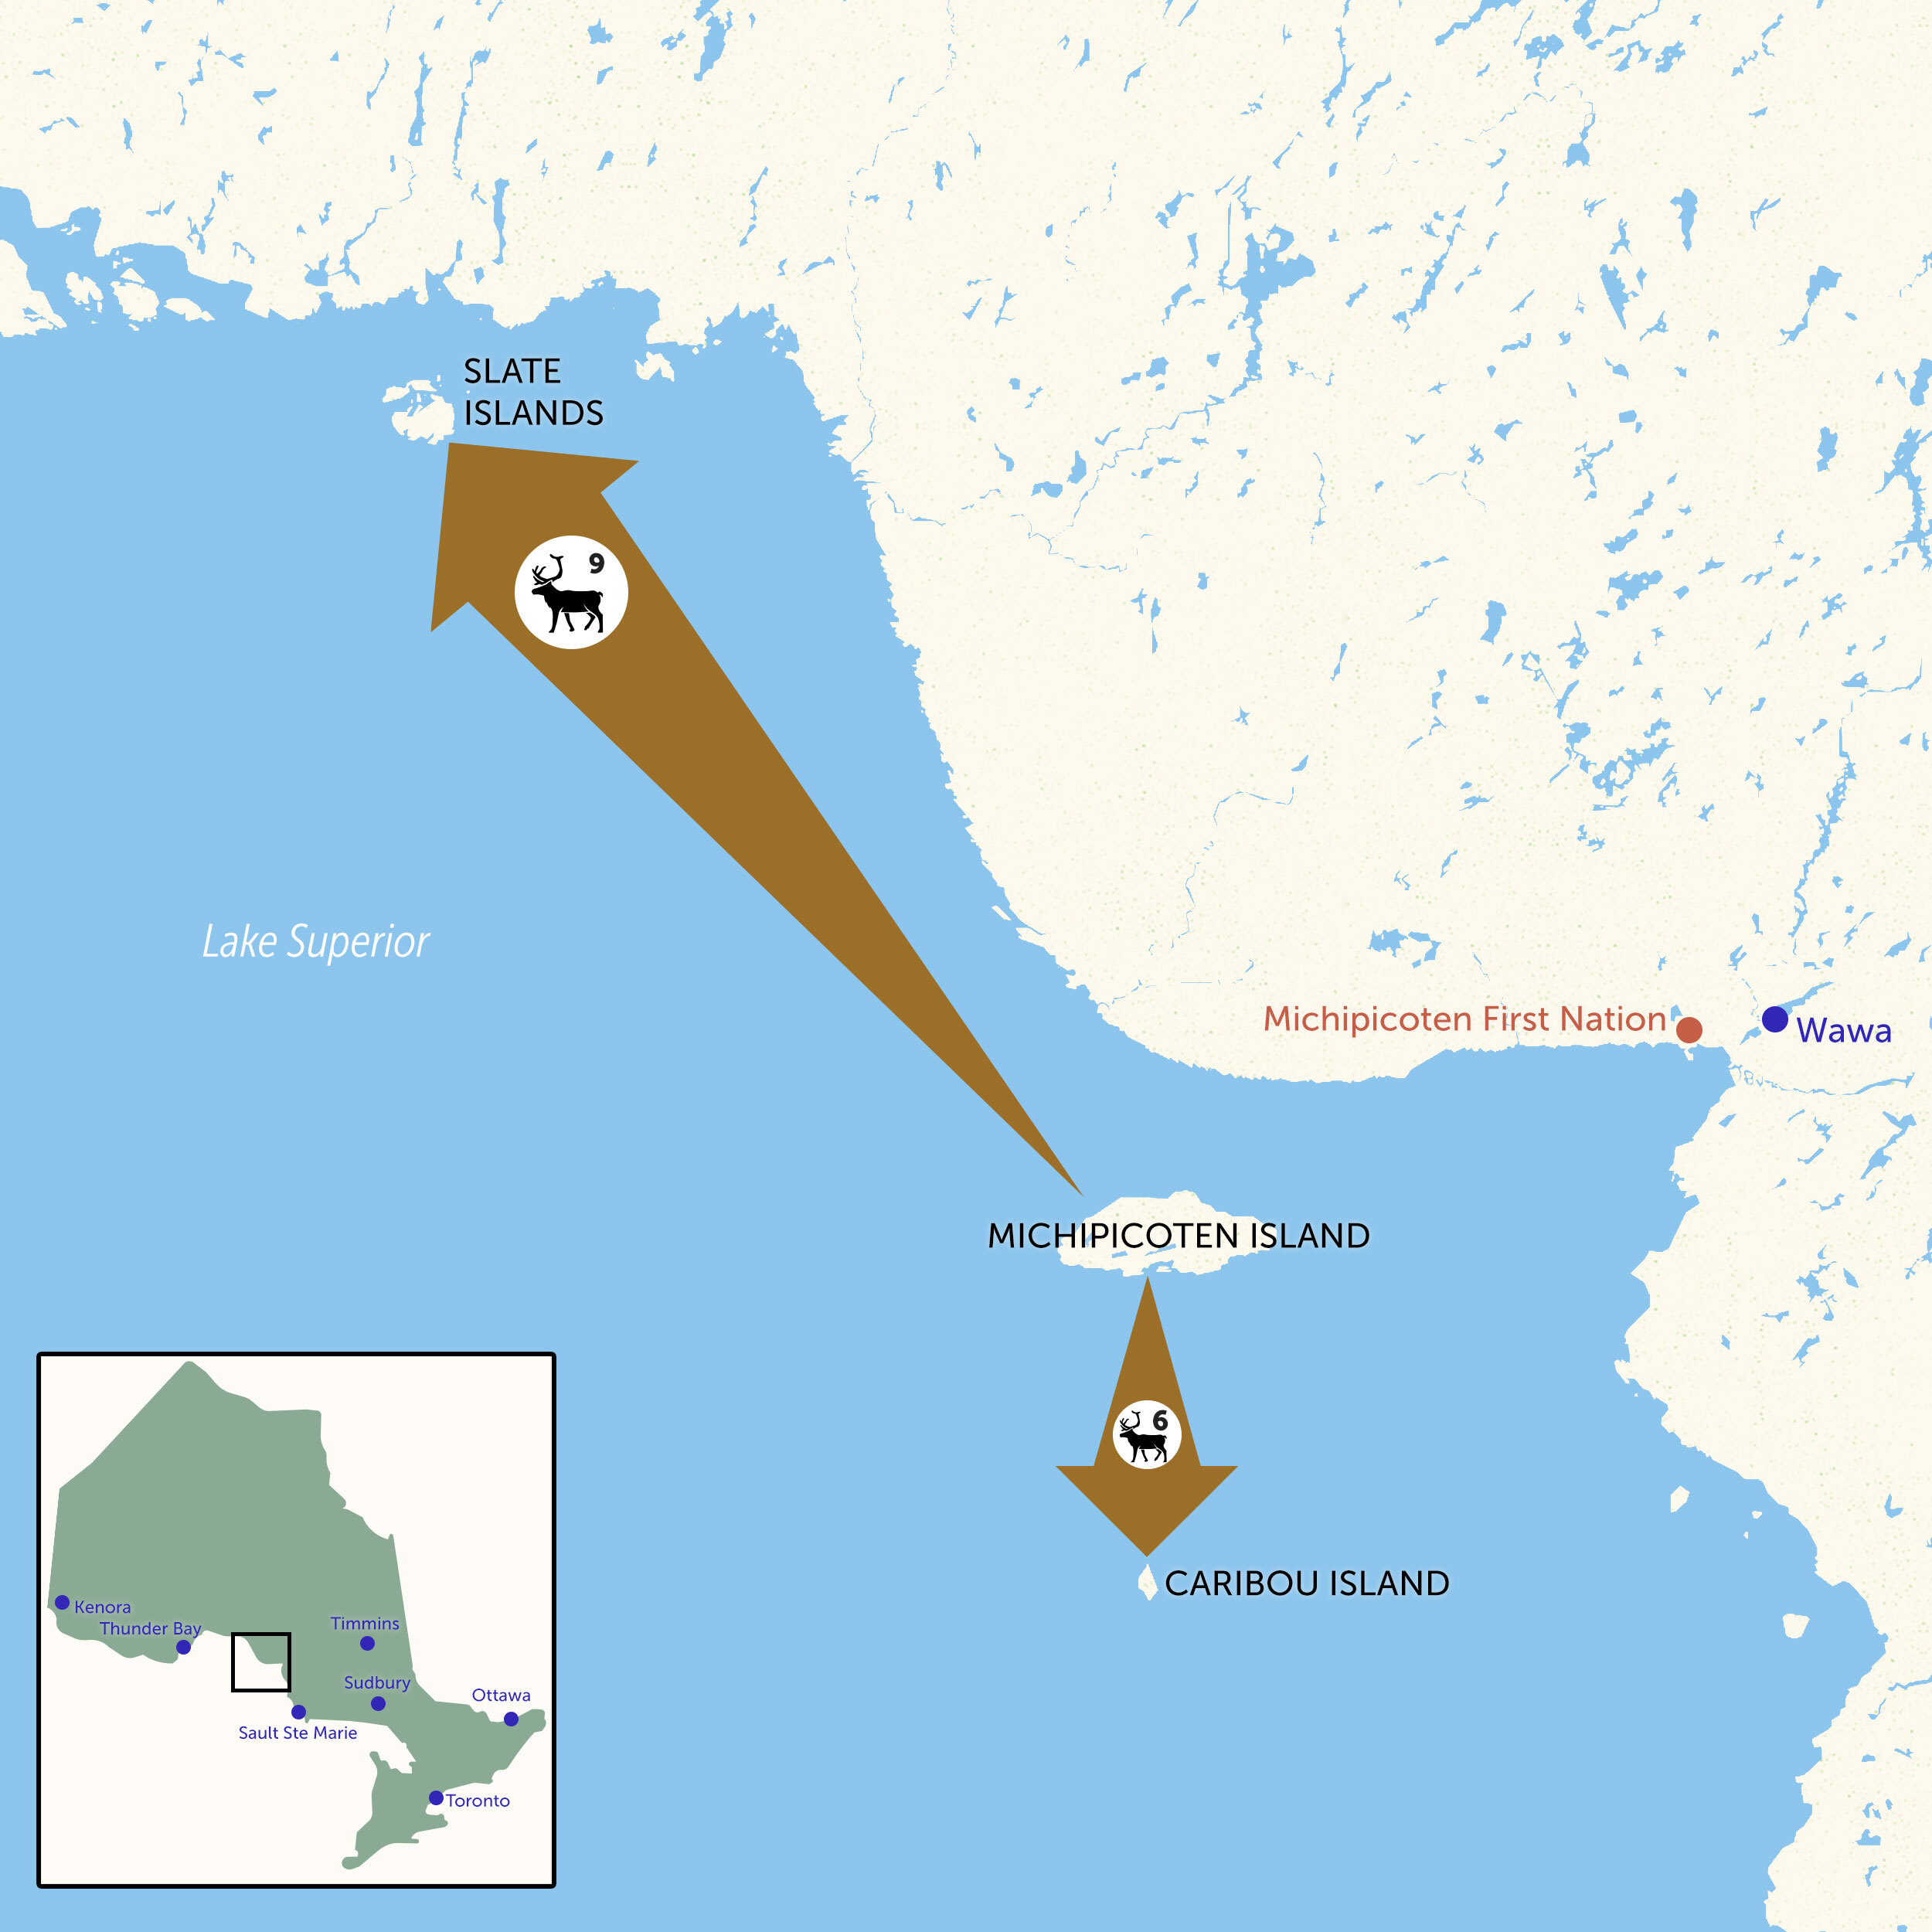 A map showing Michipicoten Island, the Slate Islands and Caribou Island on Lake Superior.